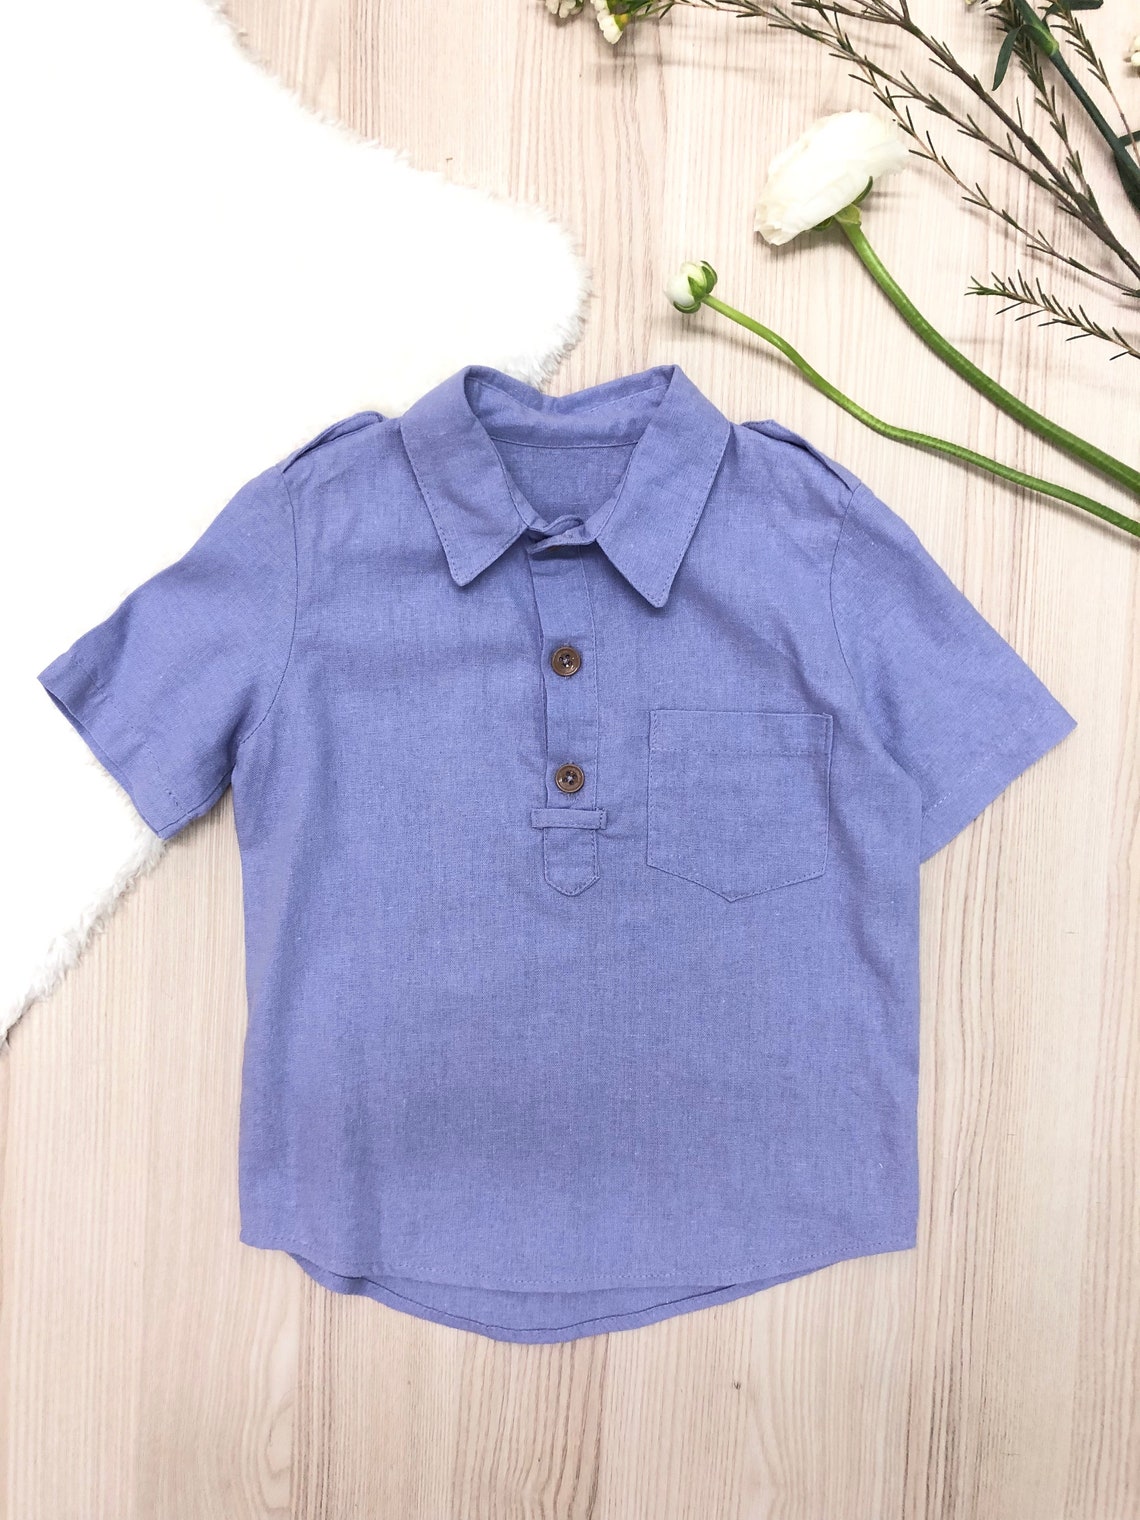 Baby boy t-shirt children clothing cute t-shirt linen | Etsy